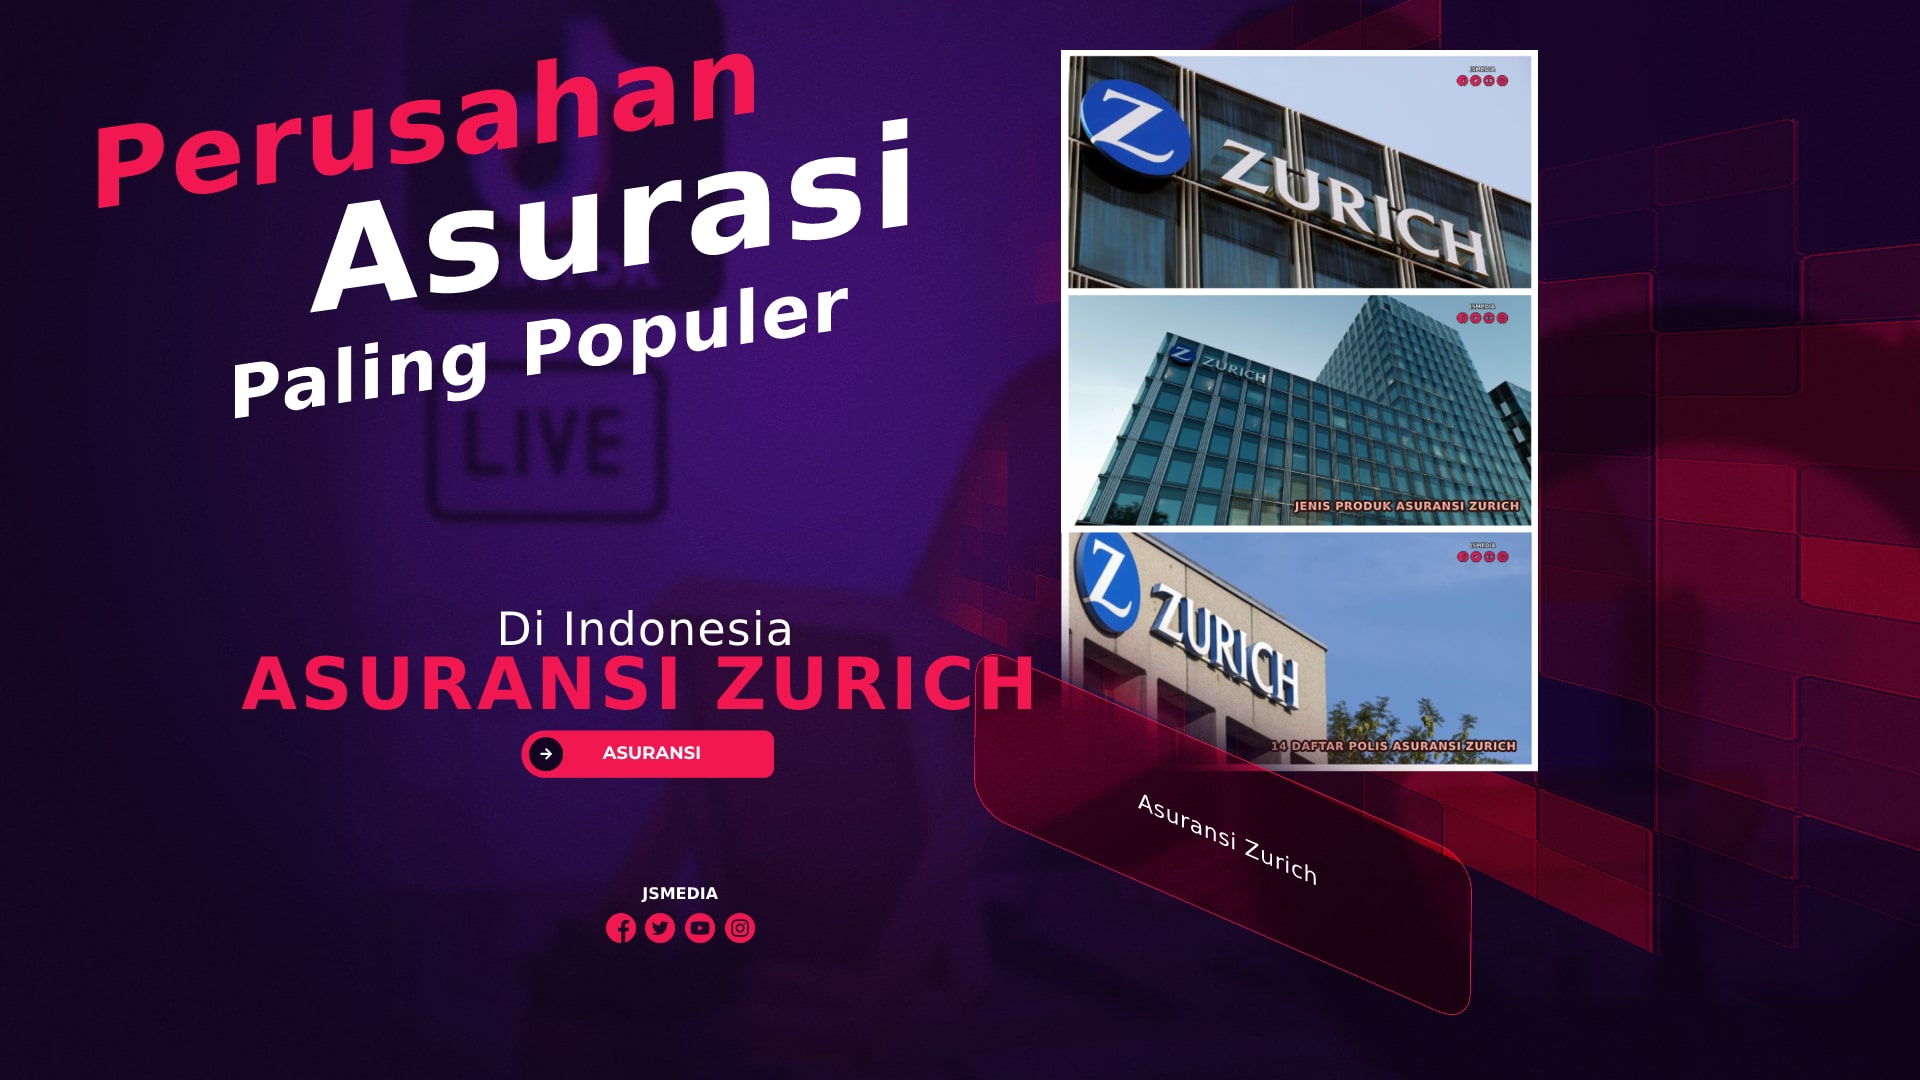 Asuransi Zurich, Perusahan Asurasi Paling Populer di Indonesia